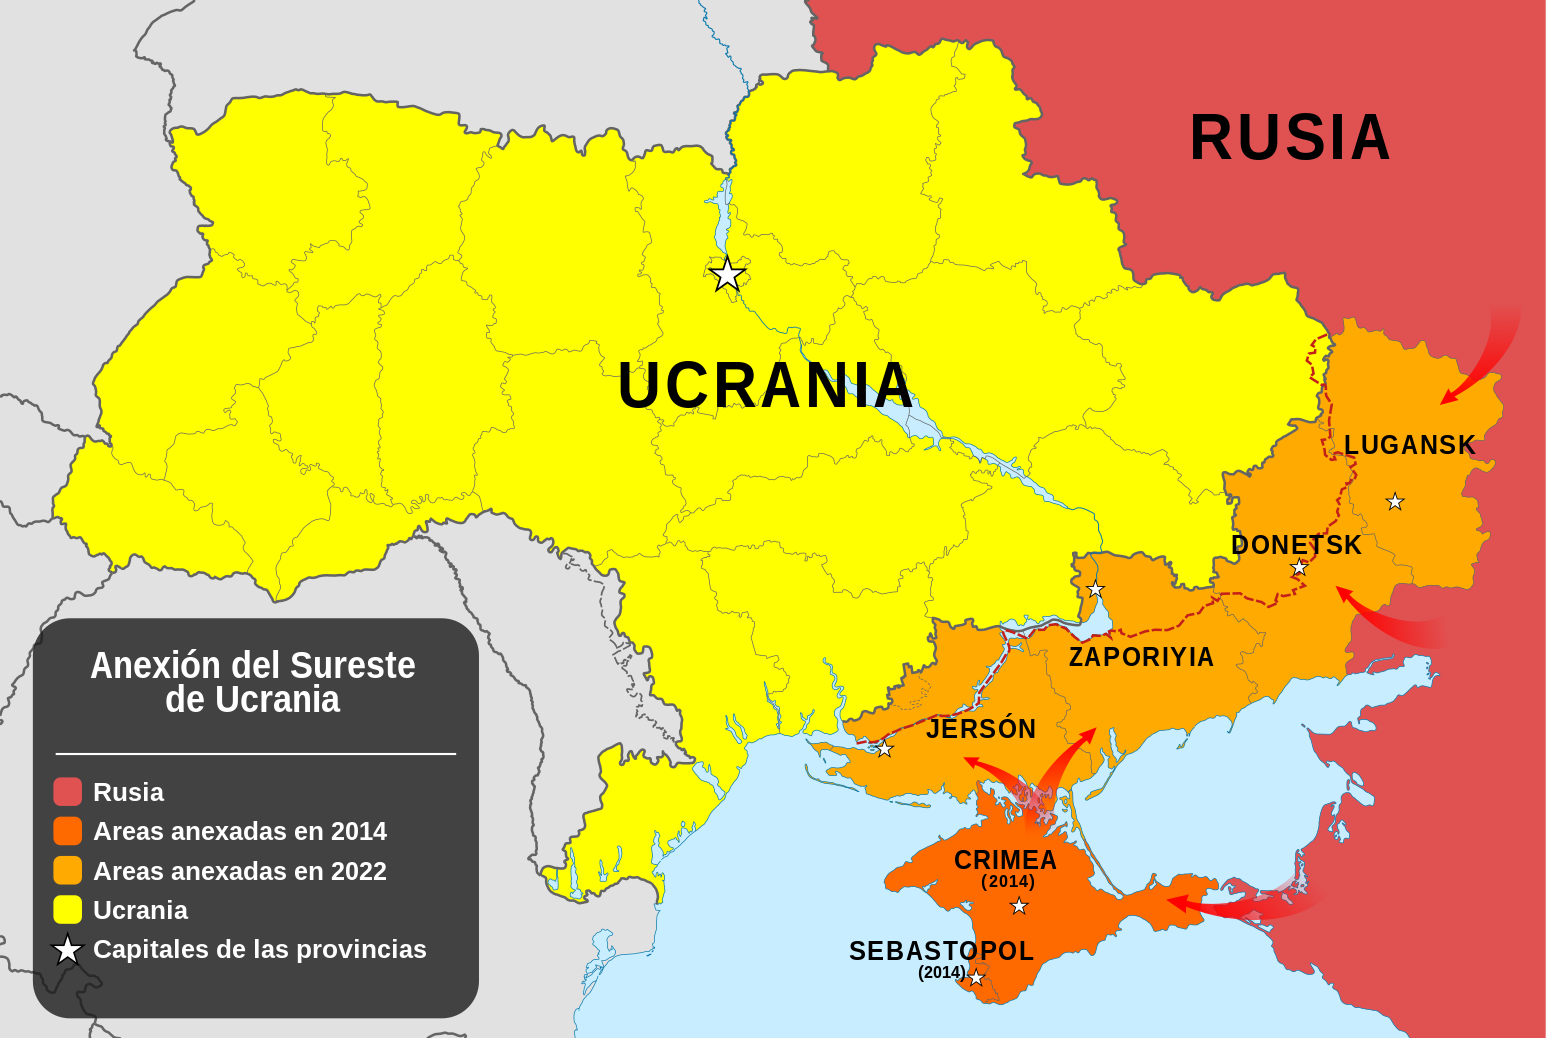 Anexión del sudeste de Ucrania por Rusia - Wikipedia, la enciclopedia libre